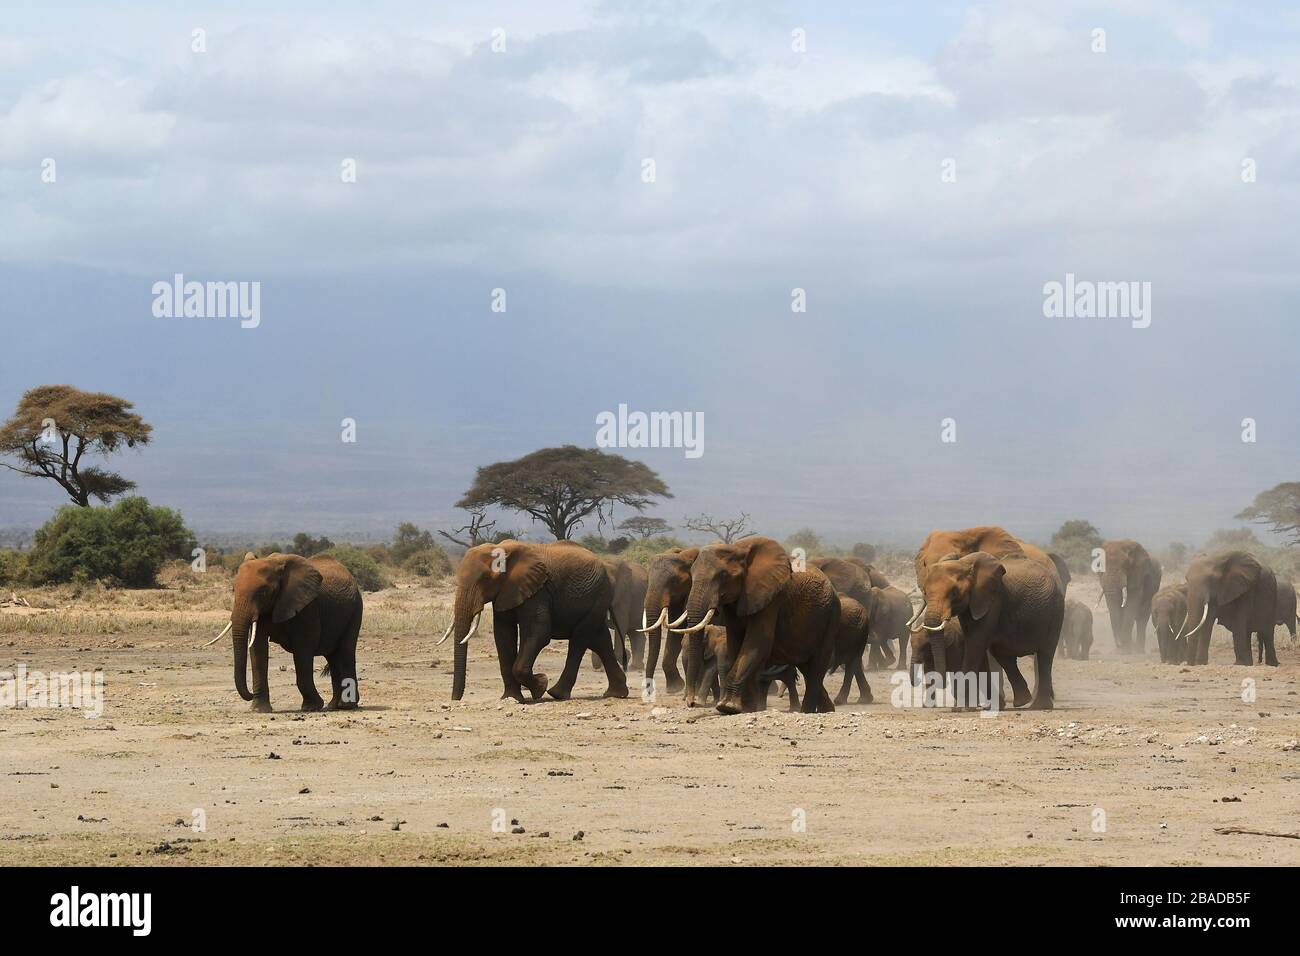 The image of African elephant (Loxodonta africana) herd in Amboseli national park, Kenya Stock Photo